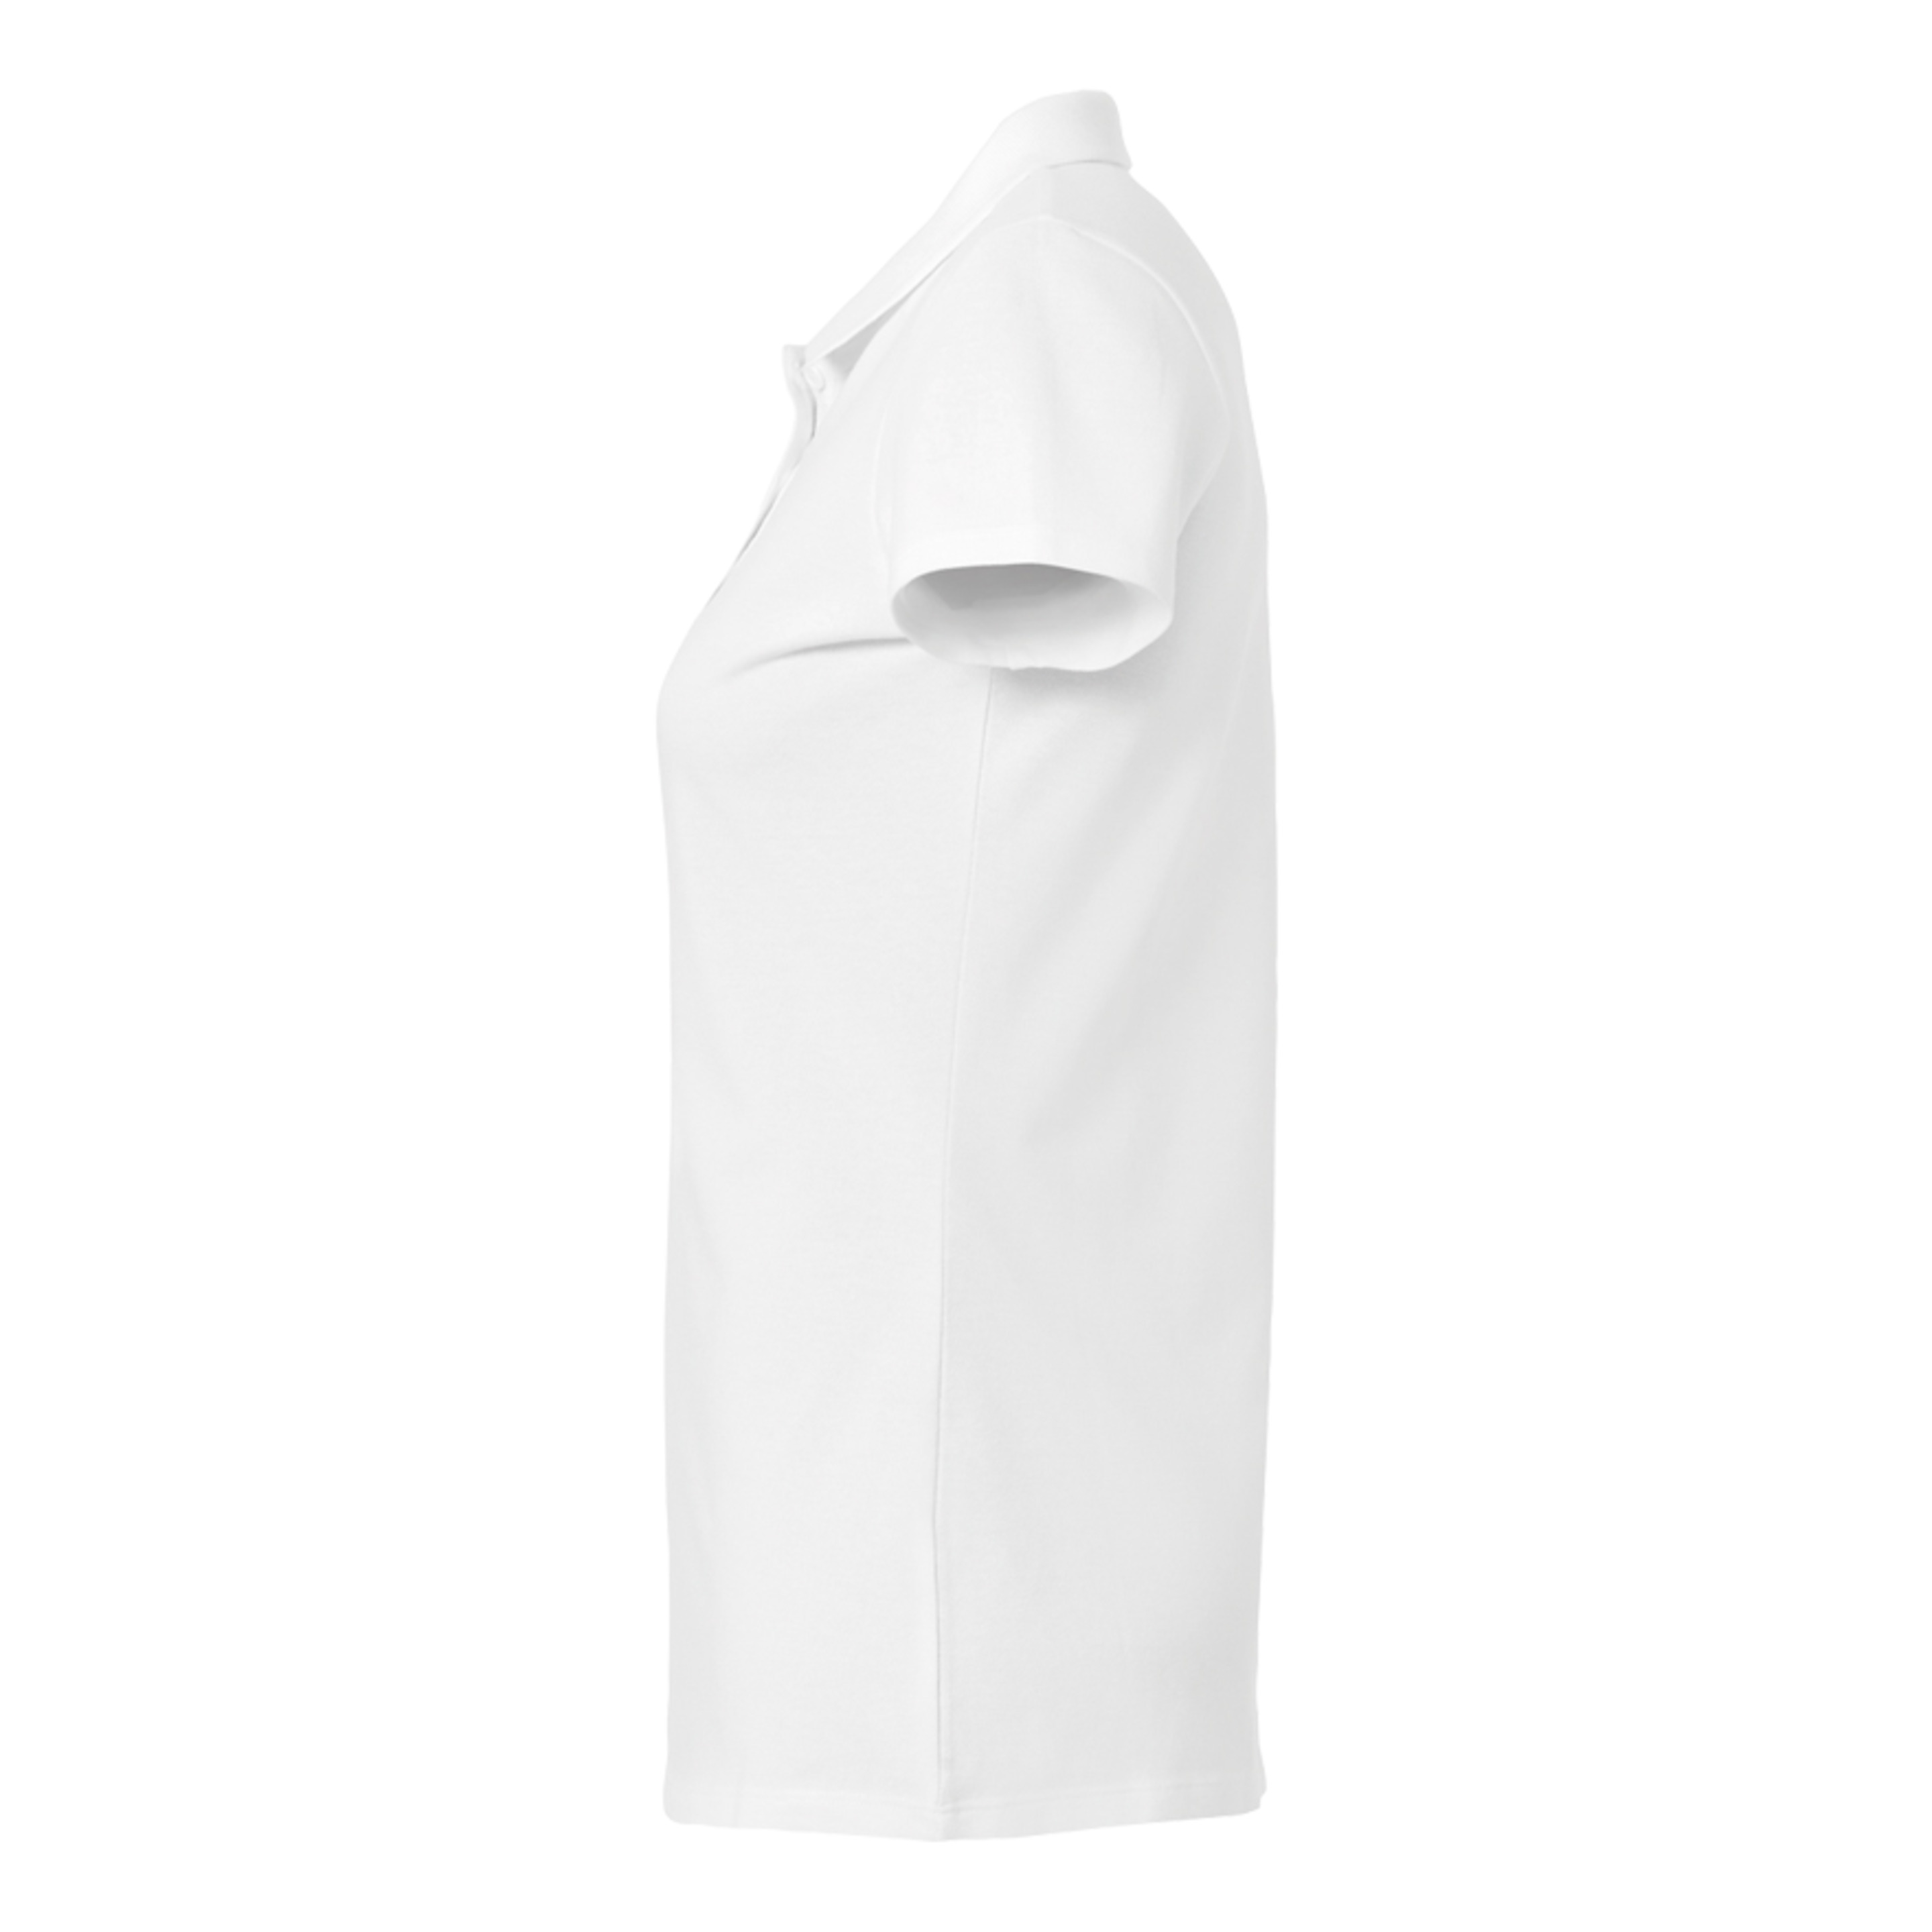 Polo Shirt De Mujer Blanco Kempa - blanco  MKP